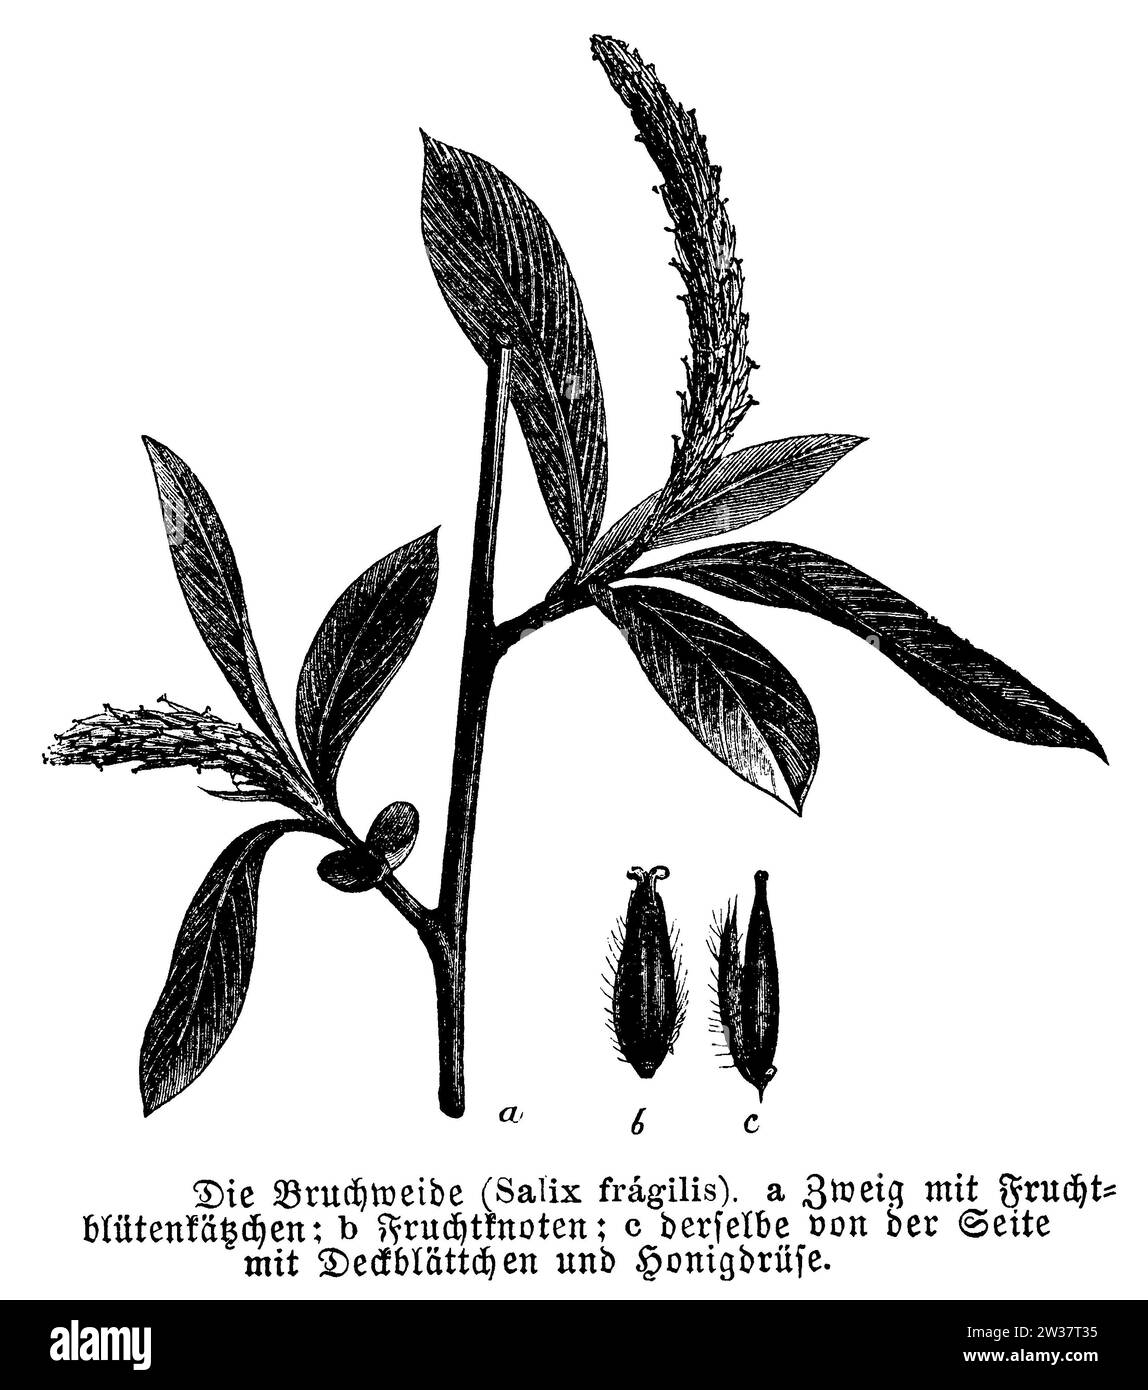 Salix fragilis with flower and fruit, Salix fragilis, anonym (botany book, 1889), Bruch-Weide mit Blüte und Frucht, Saule fragile, avec fleur et fruit Stock Photo